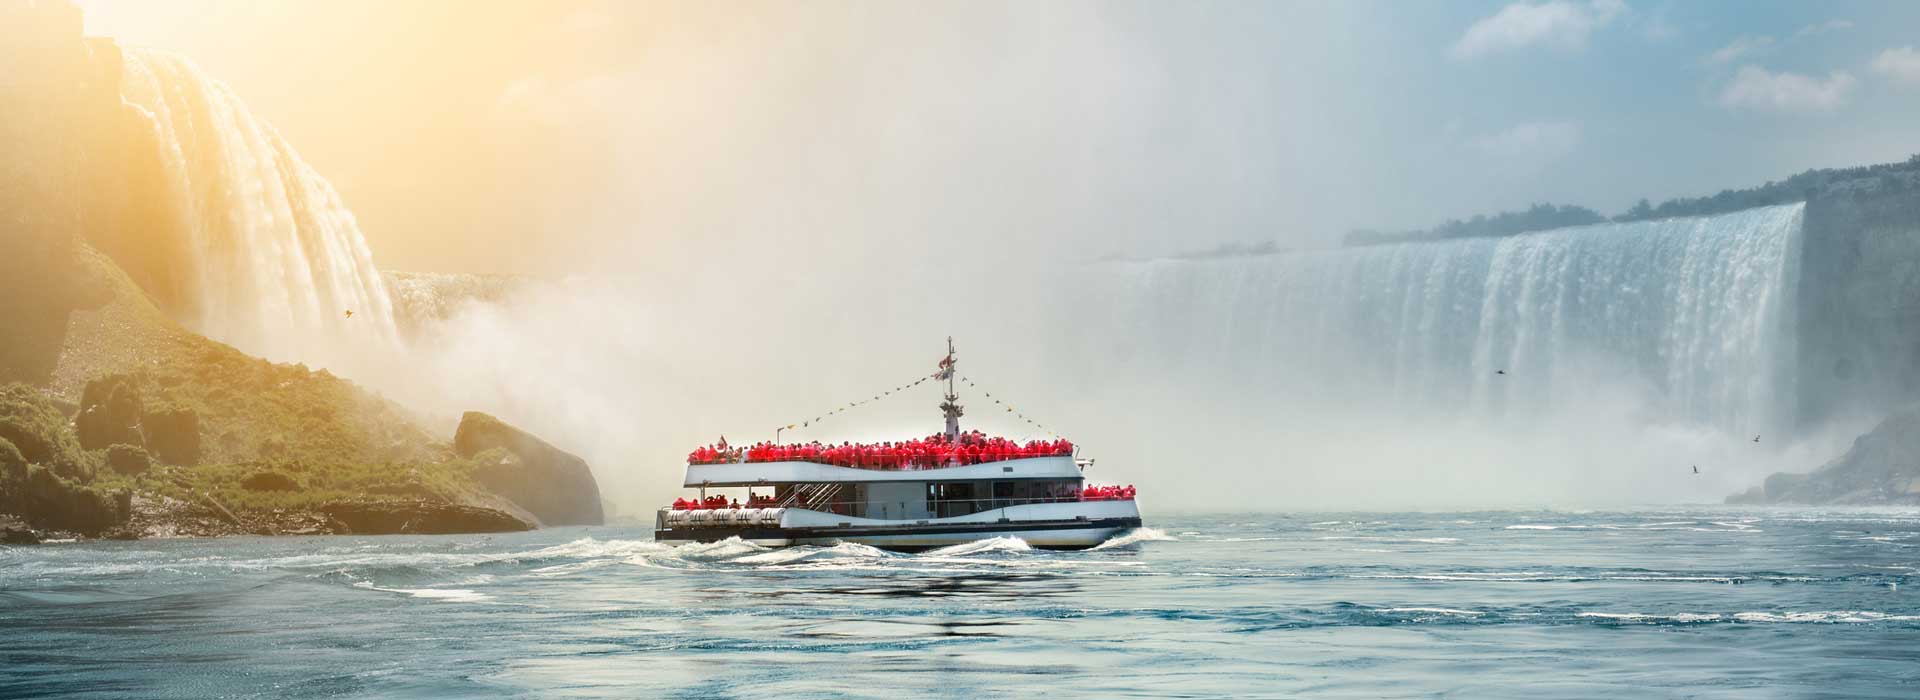 canadian boat tour niagara falls